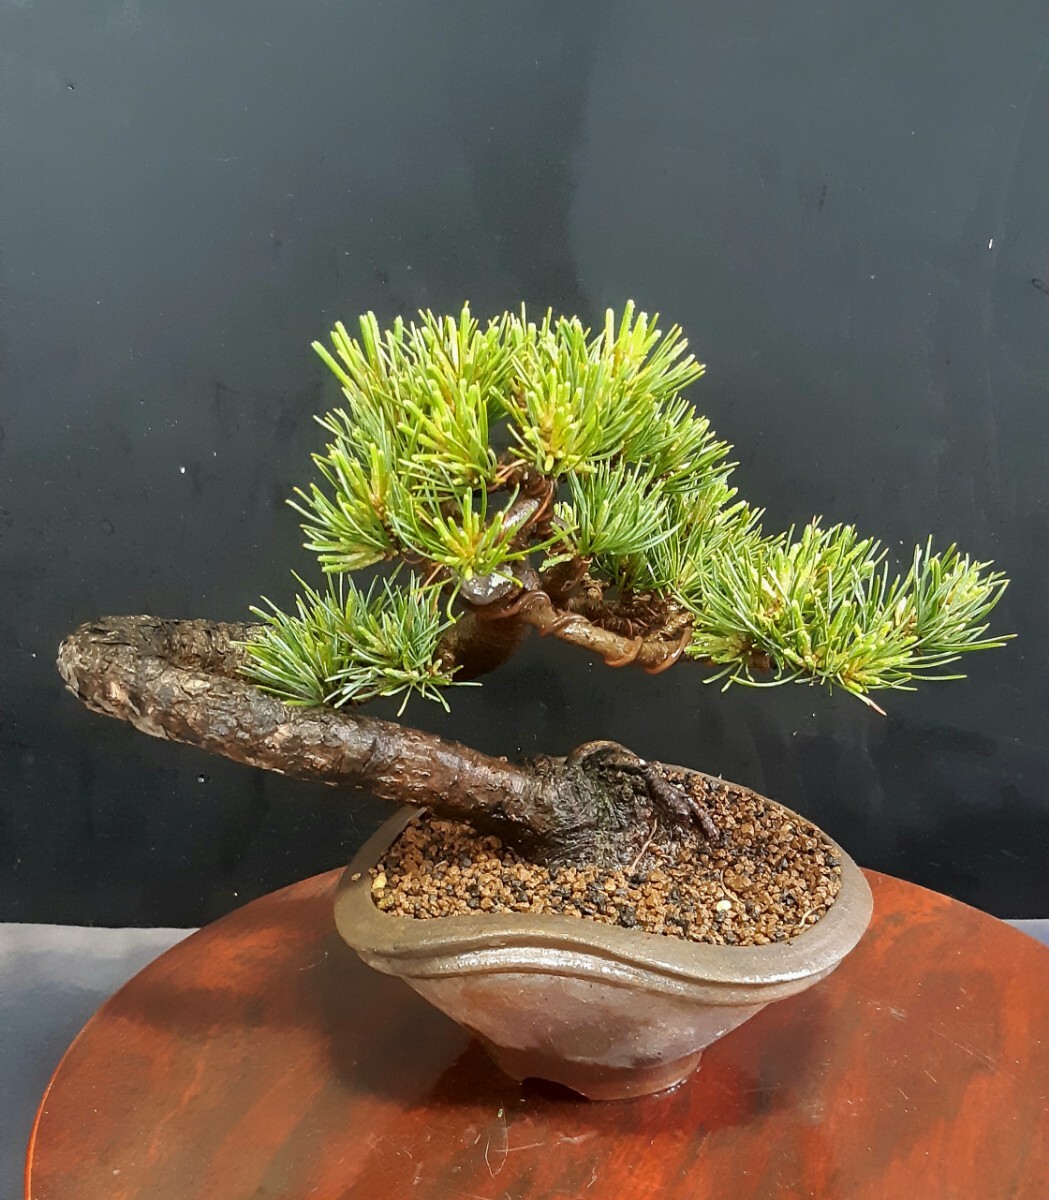  shohin bonsai материалы [. лист сосна ] бонсай угол 